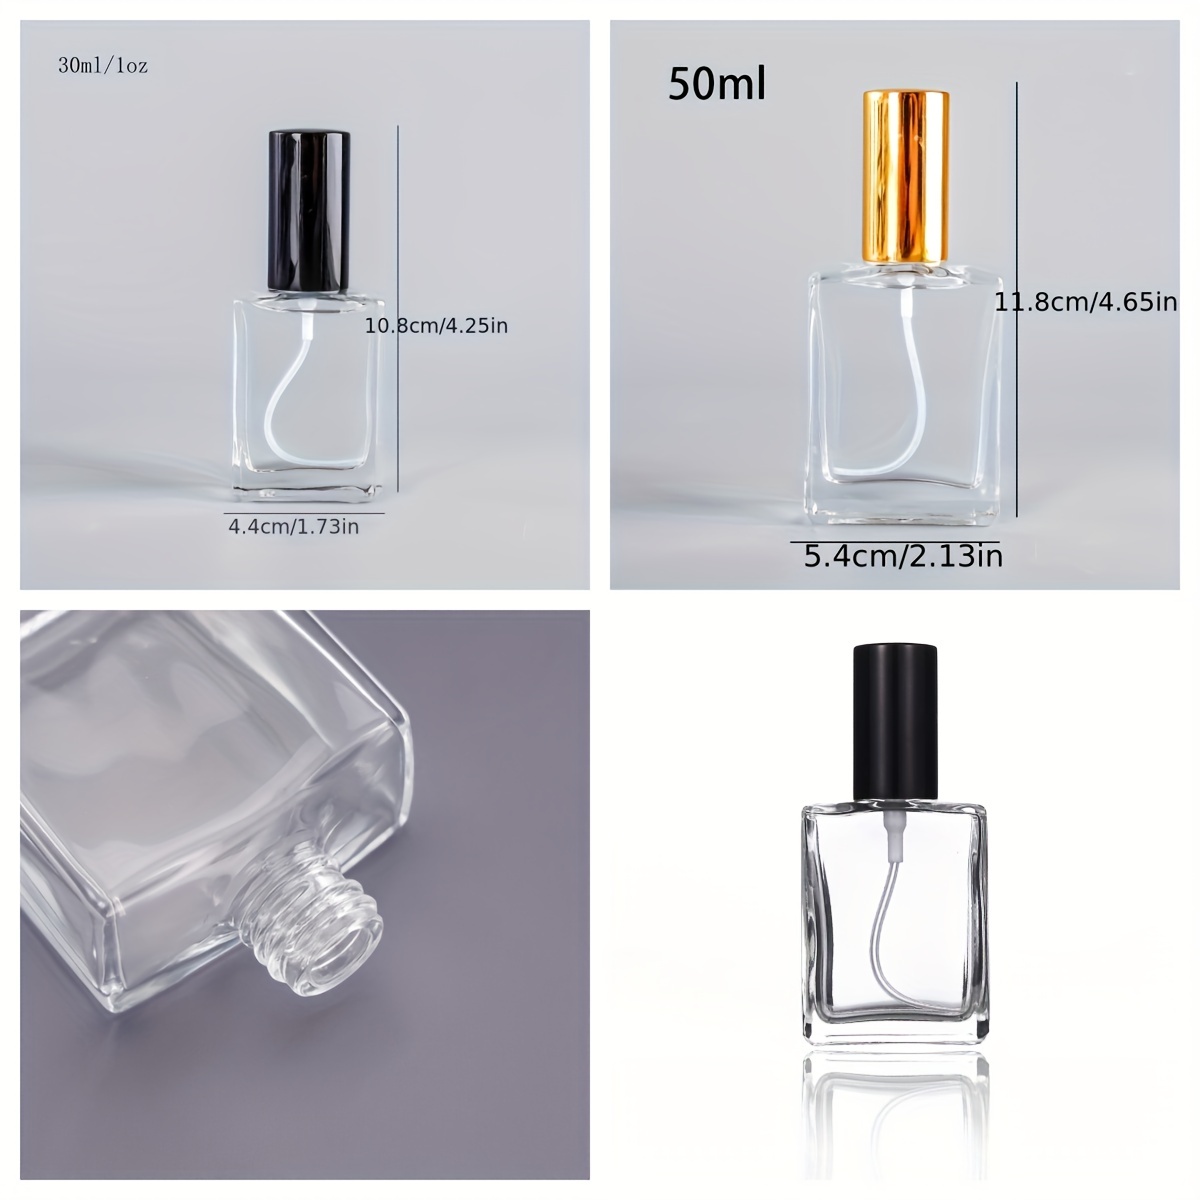  Refillable Perfume Bottle Atomizer for Travel, Yeejok